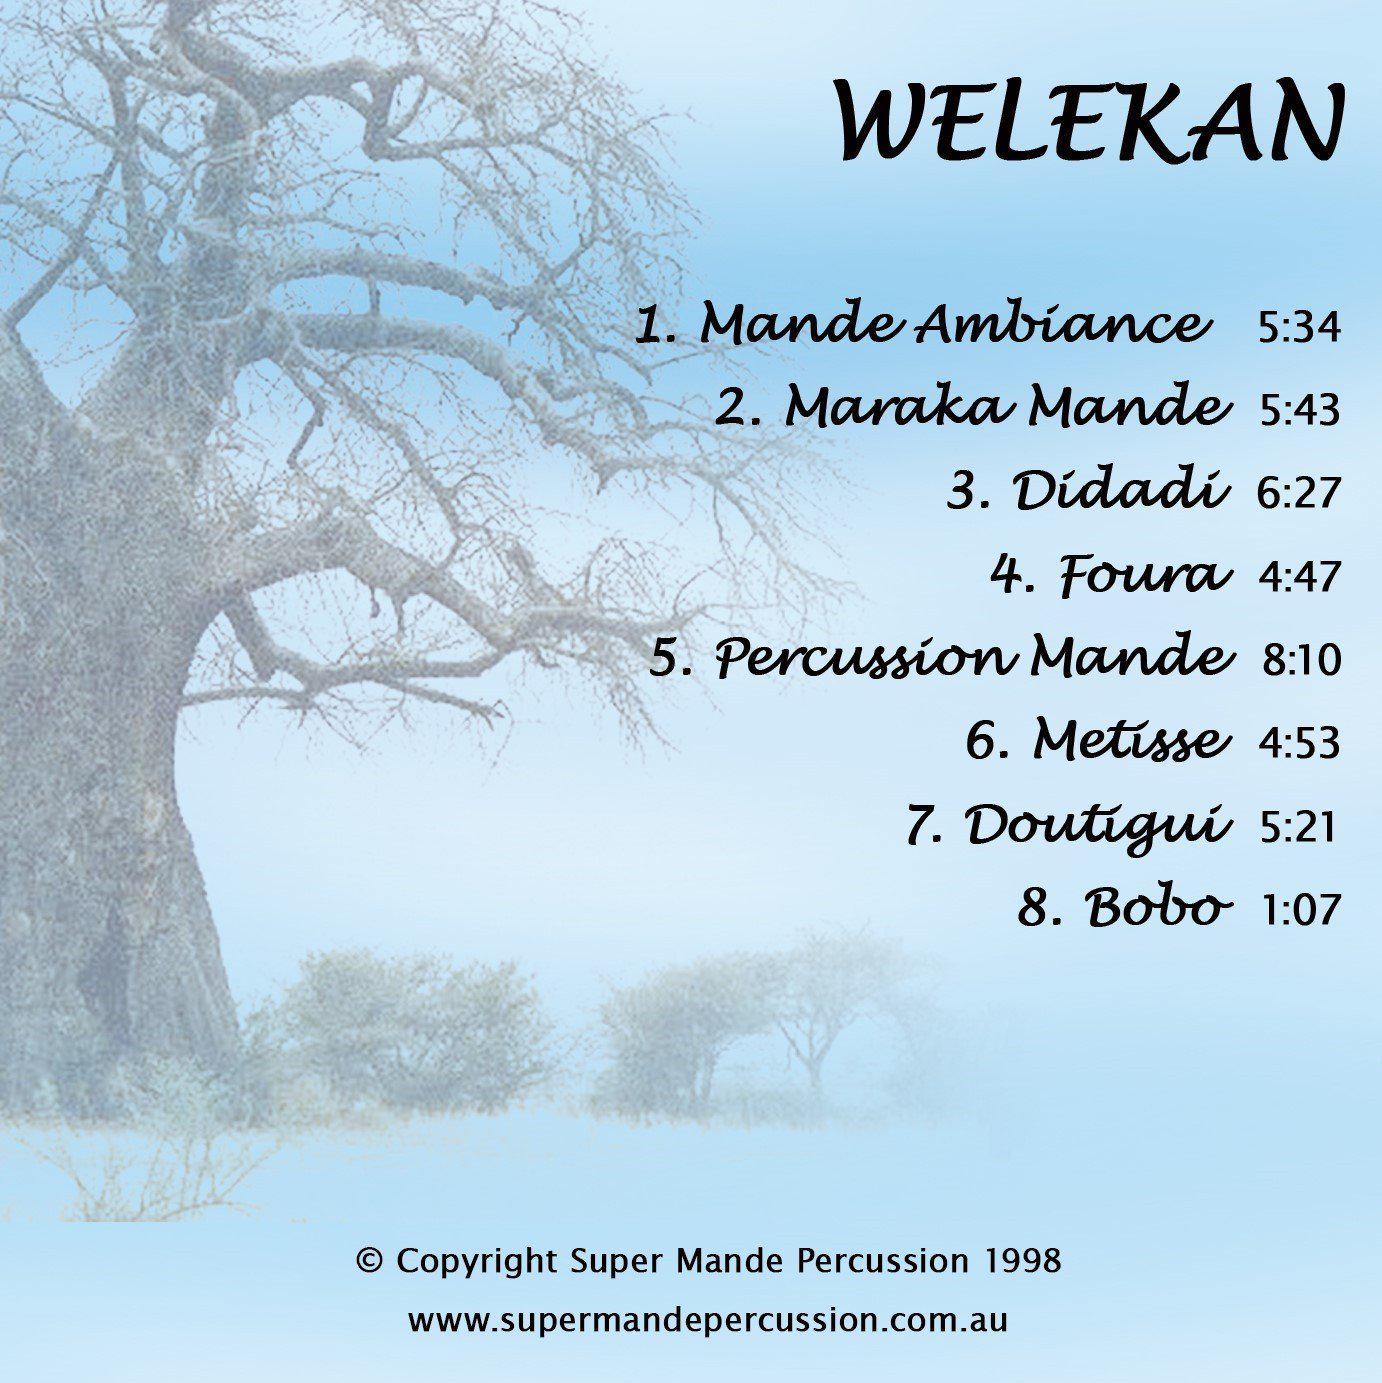 Welekan - Super Mande Percussion